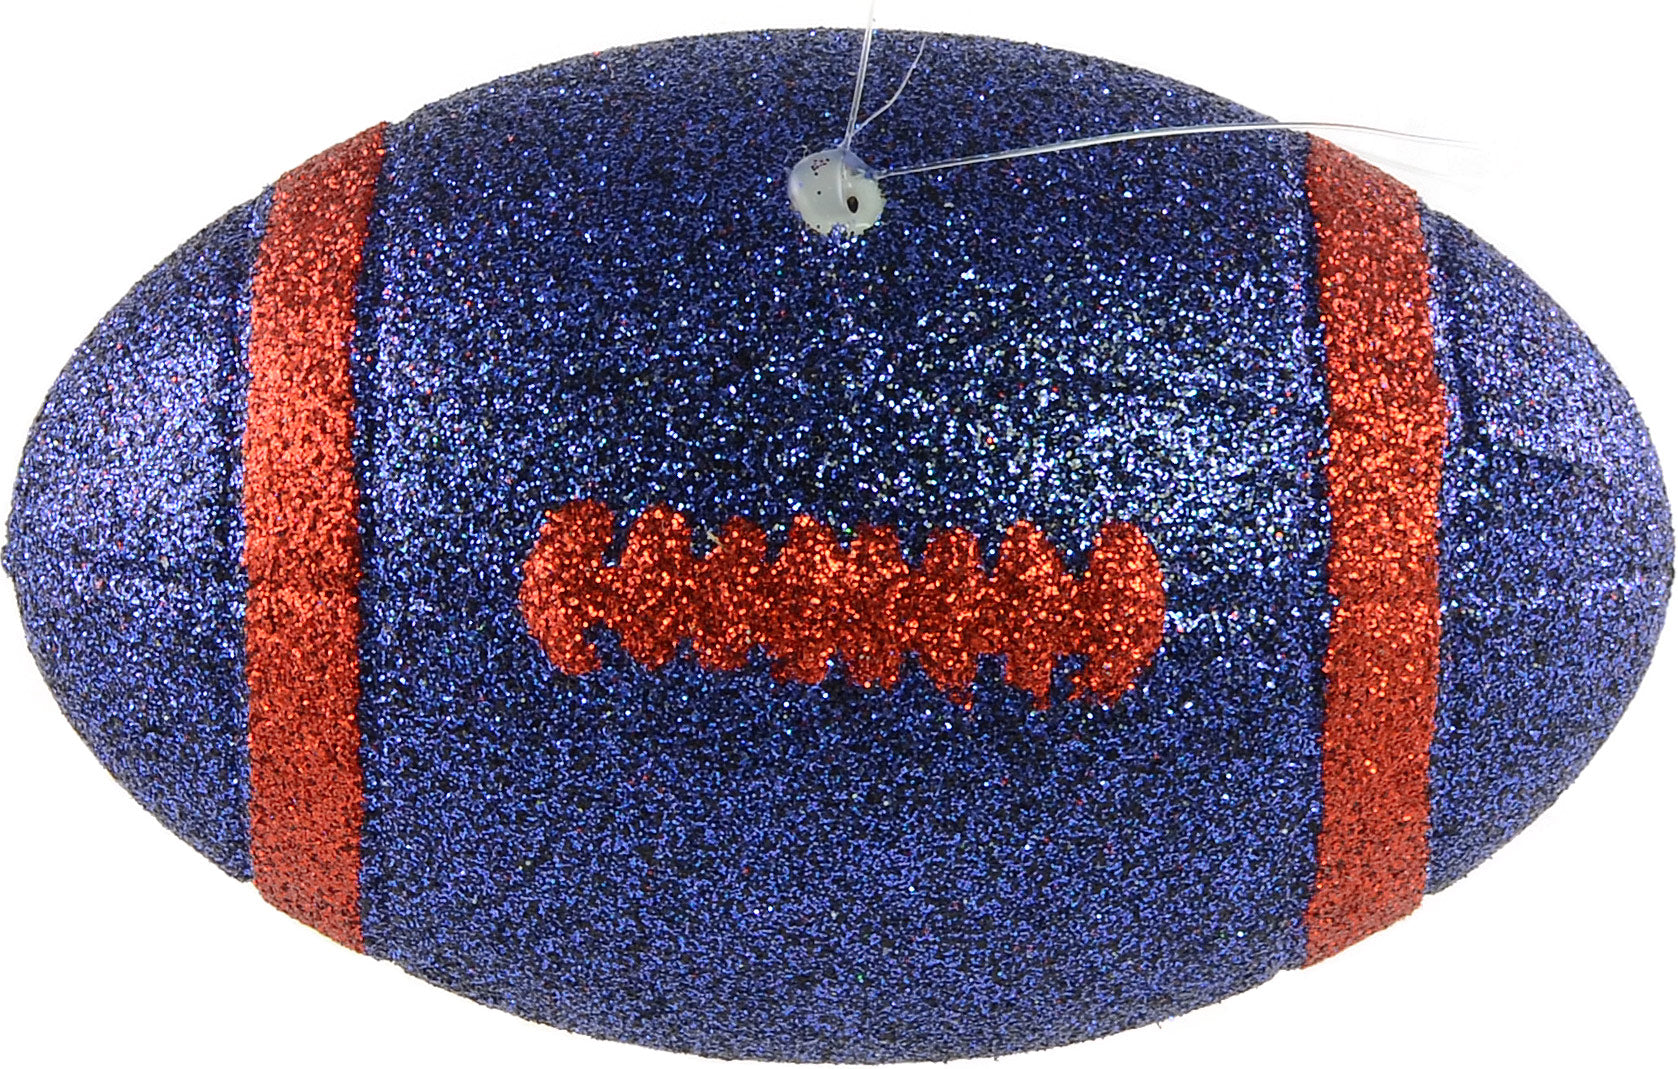 Glitter Football Ornament Assortment: Red & Navy Blue (Set of 3)